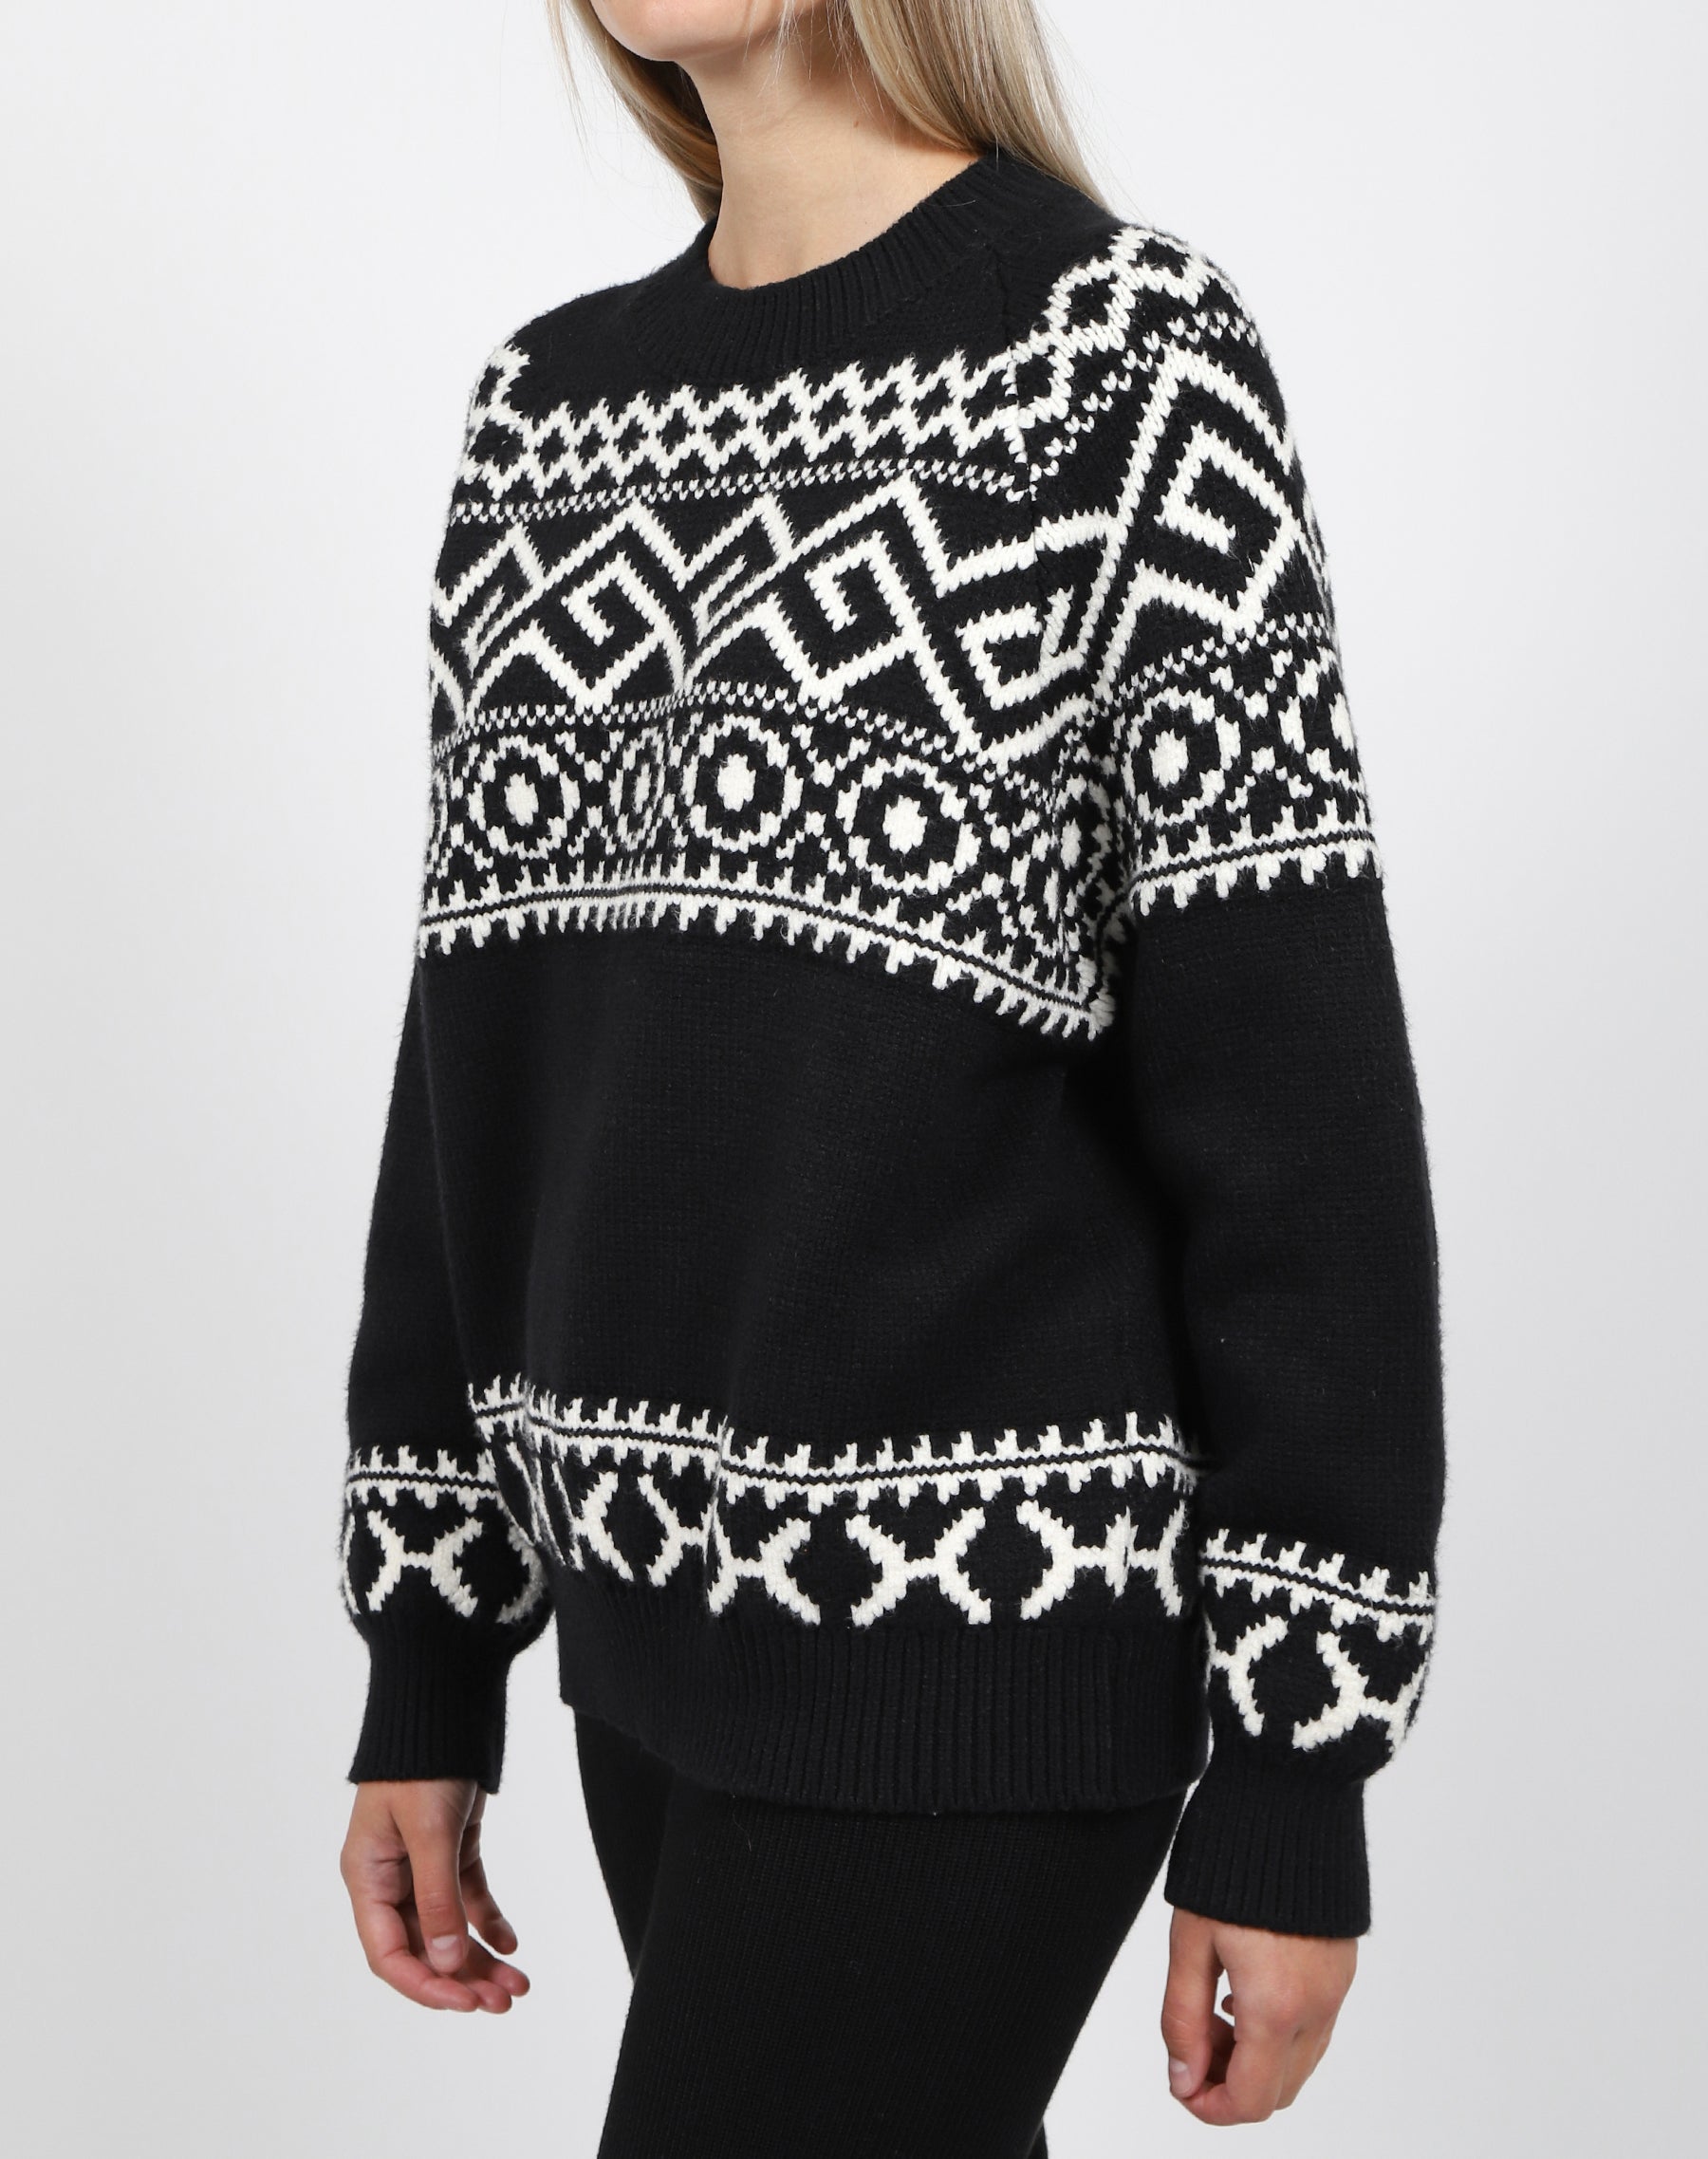 Brunette The Label Fair Isle Knit Sweater Black